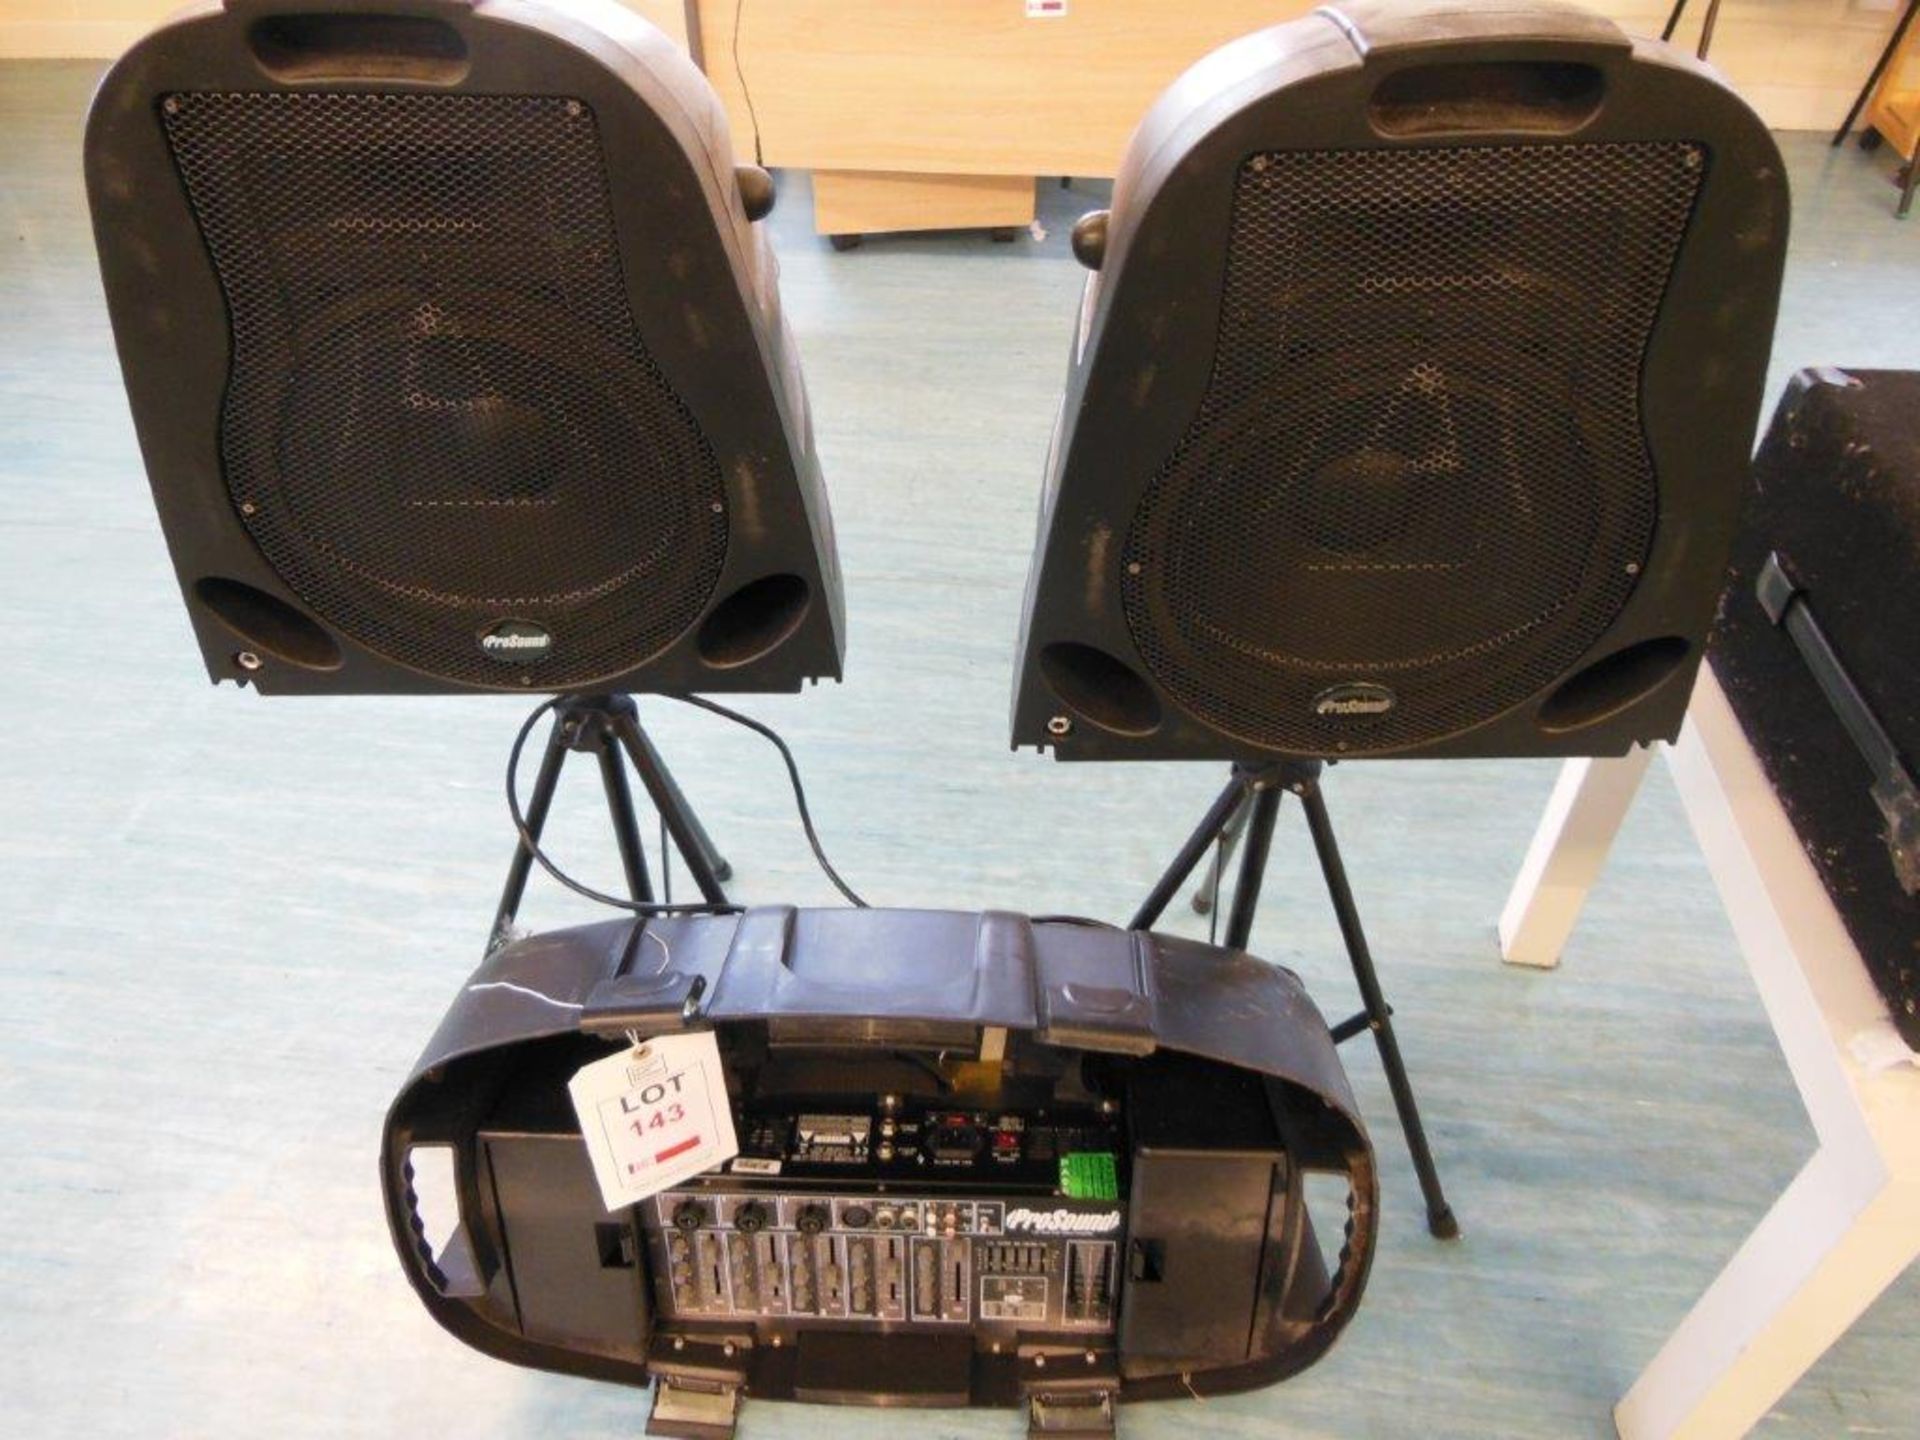 Prosound 150 watt DSP mixer amp c/w 2 speakers and travel case. *(Lot located: Milverton Prep